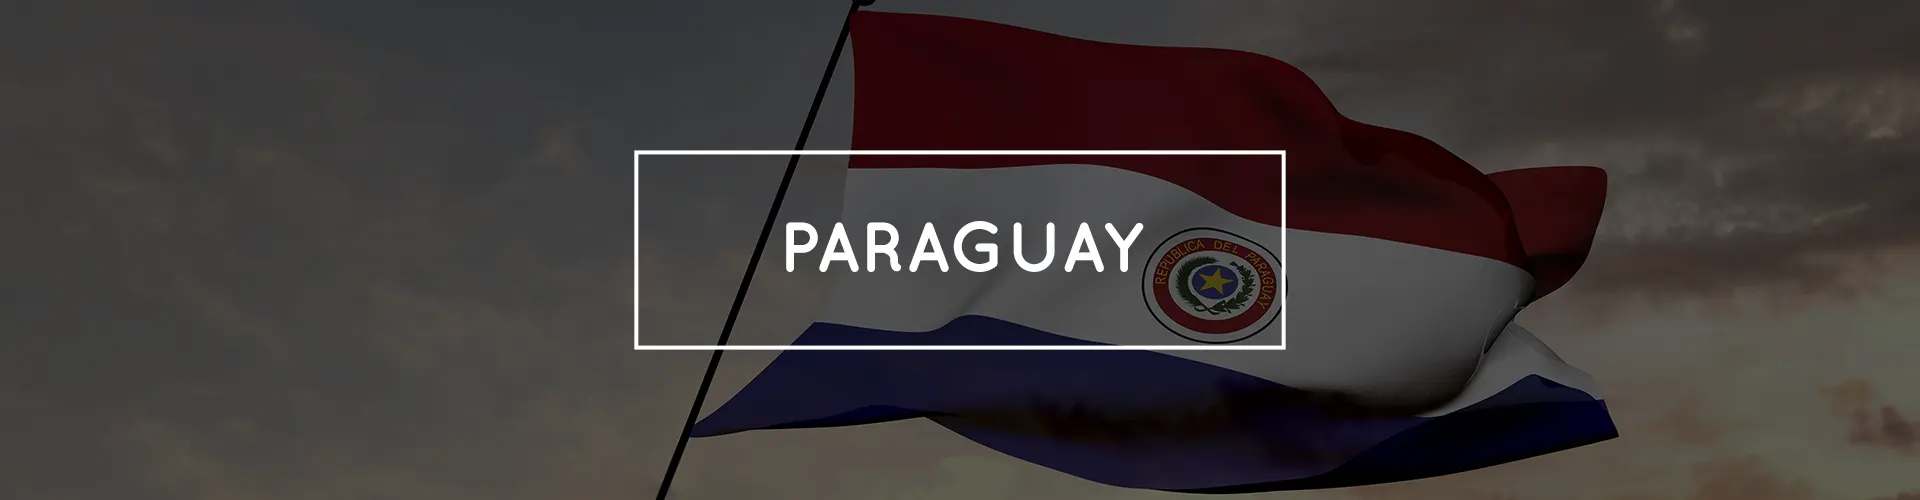 Paraguay Market Banner